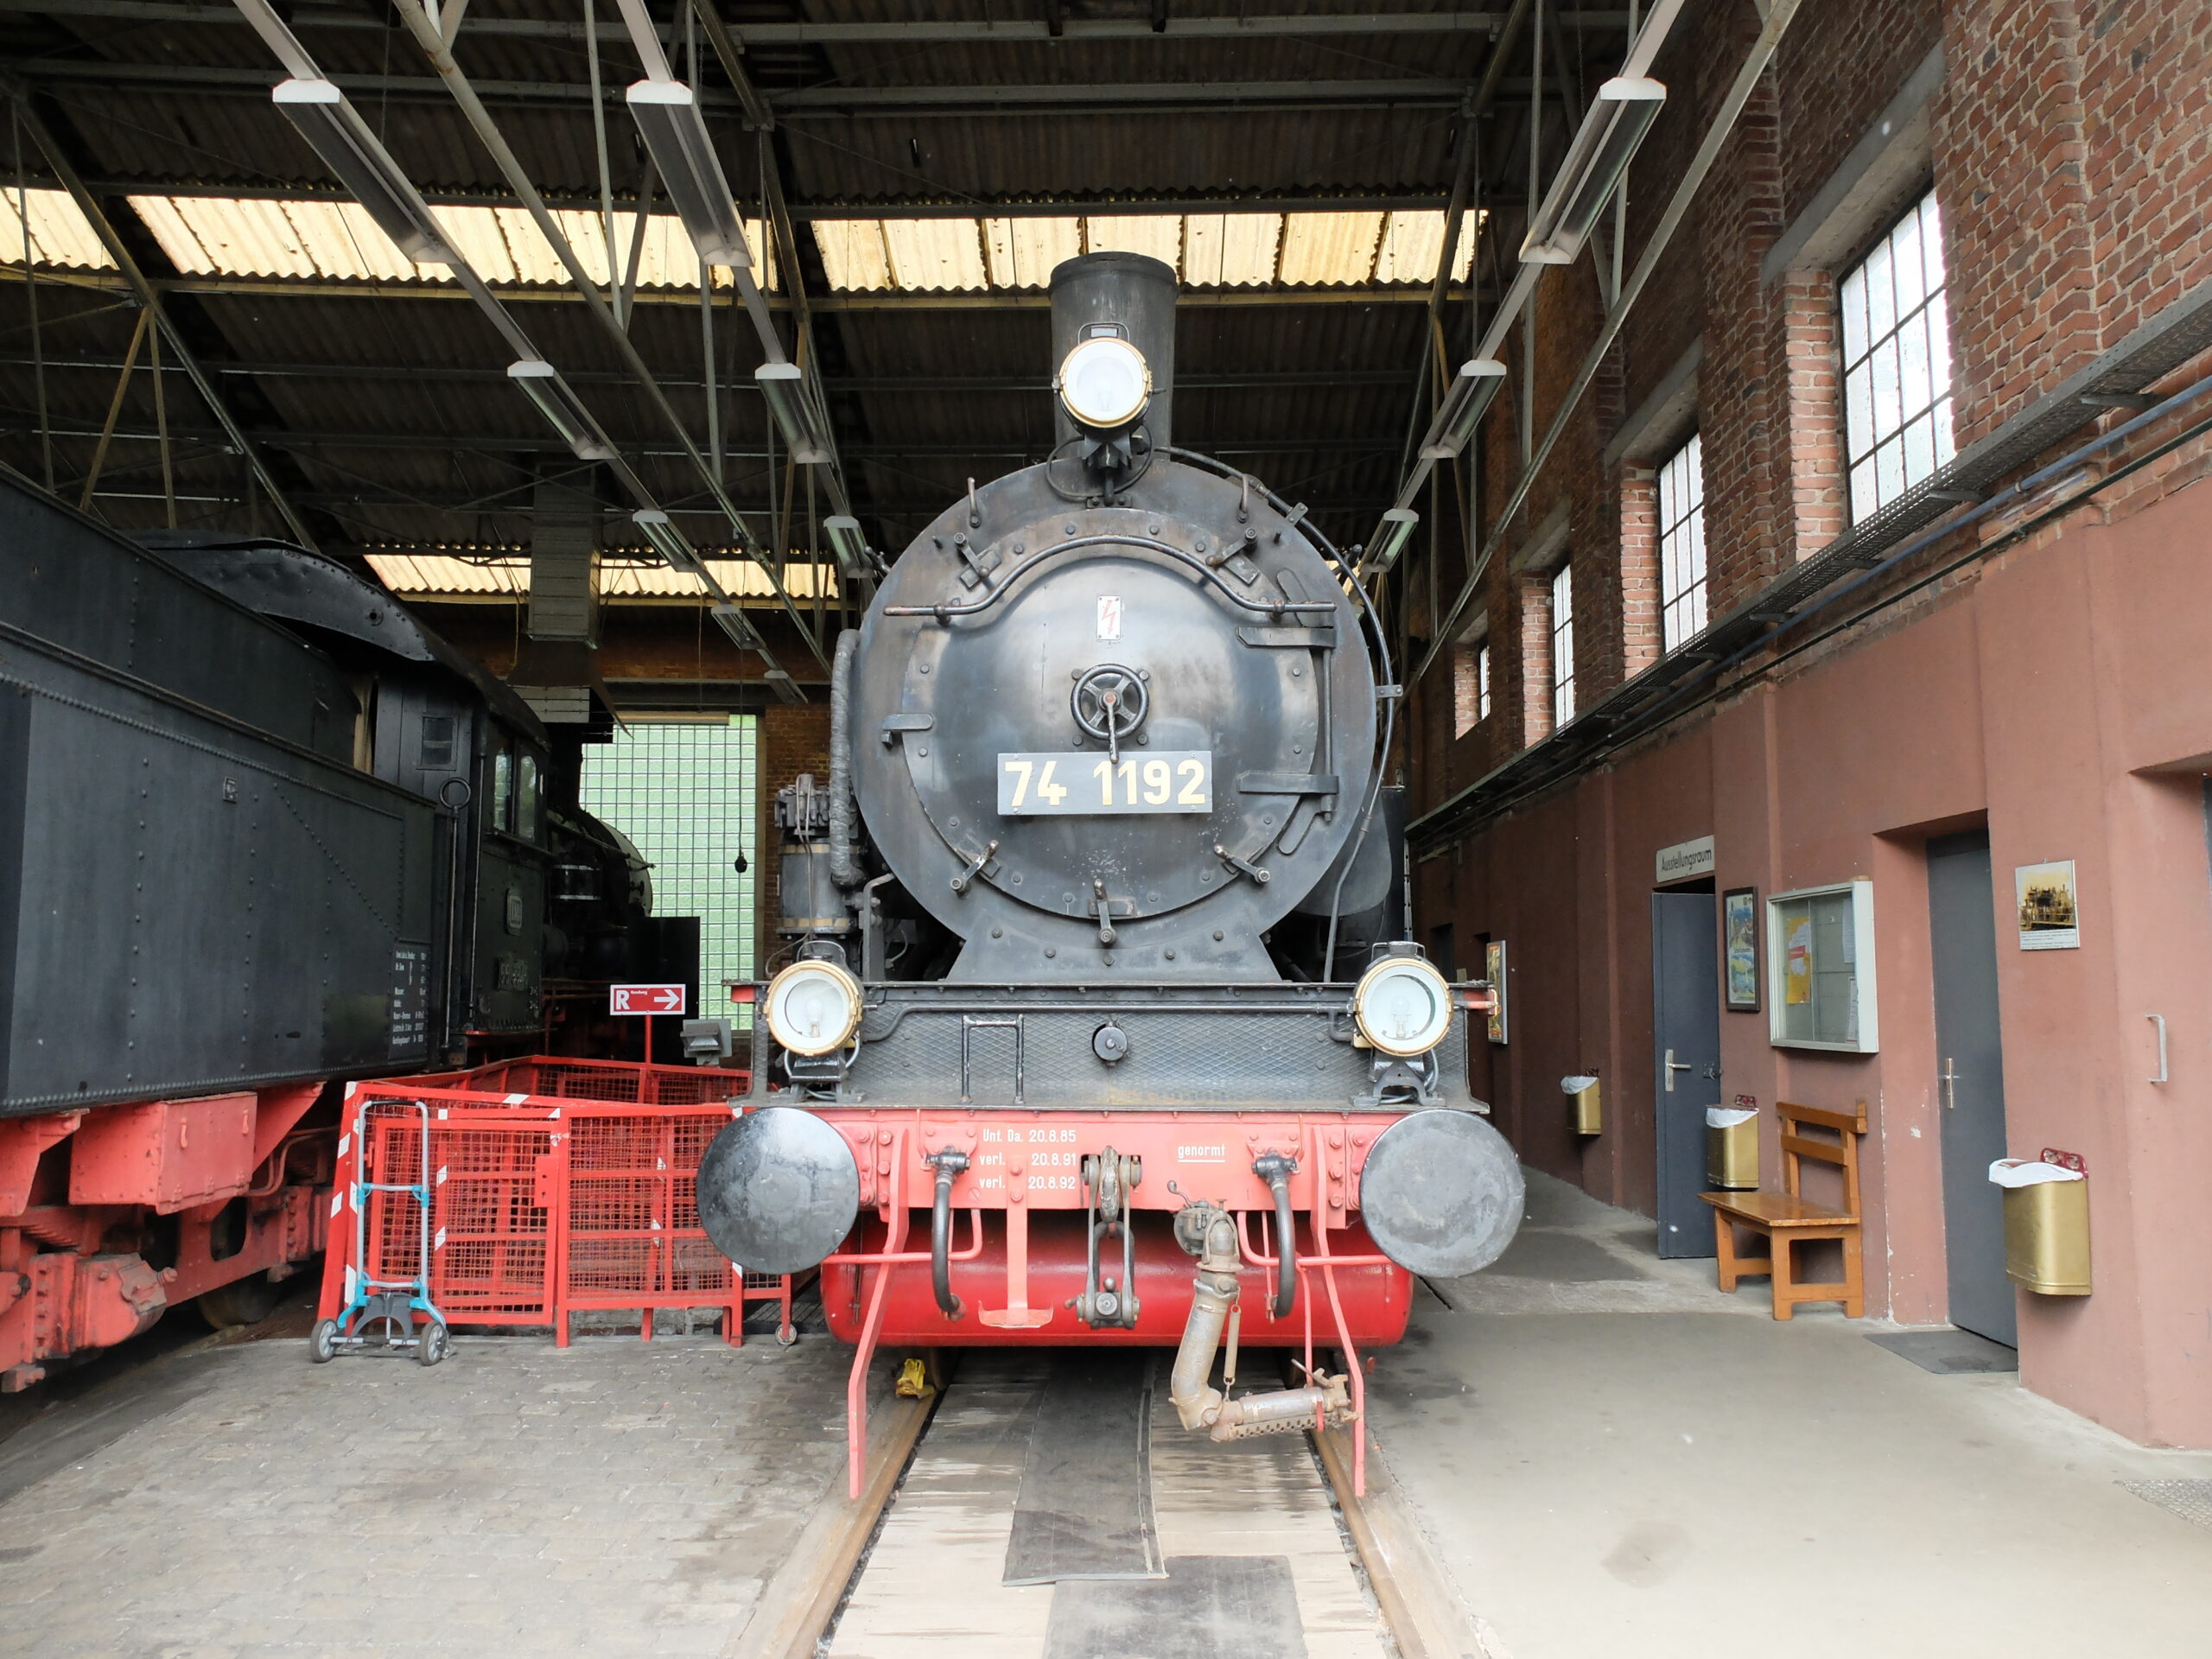 Dampflokomotive-im-eisenbahnmuseum bochum-künstlertreff-ausflug